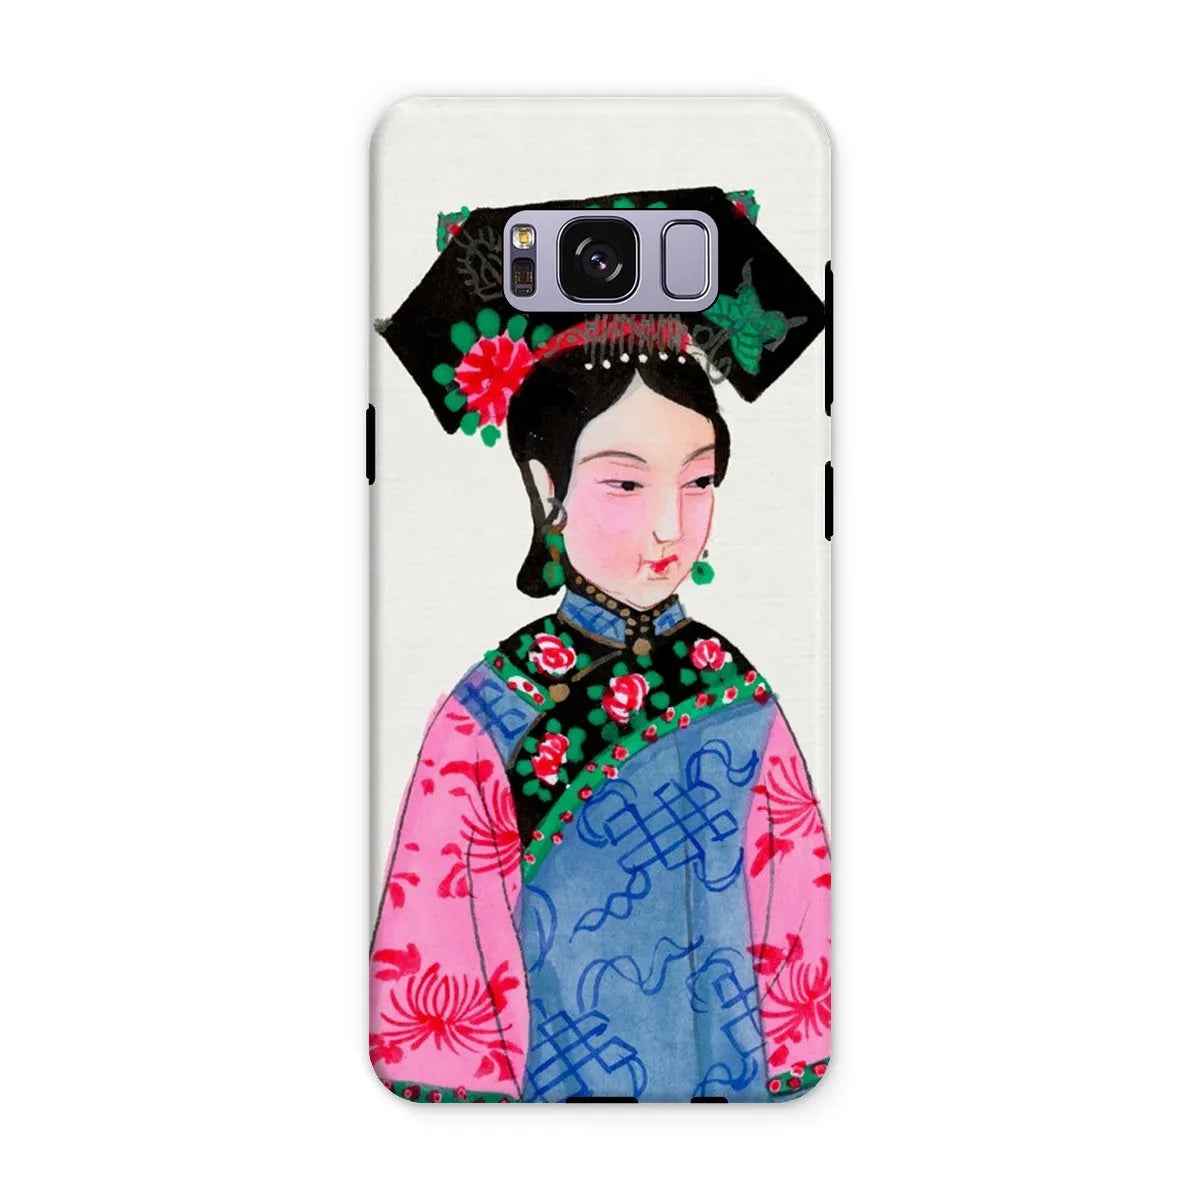 Noblewoman Too - Manchu Aesthetic Art Phone Case - Samsung Galaxy S8 Plus / Matte - Mobile Phone Cases - Aesthetic Art